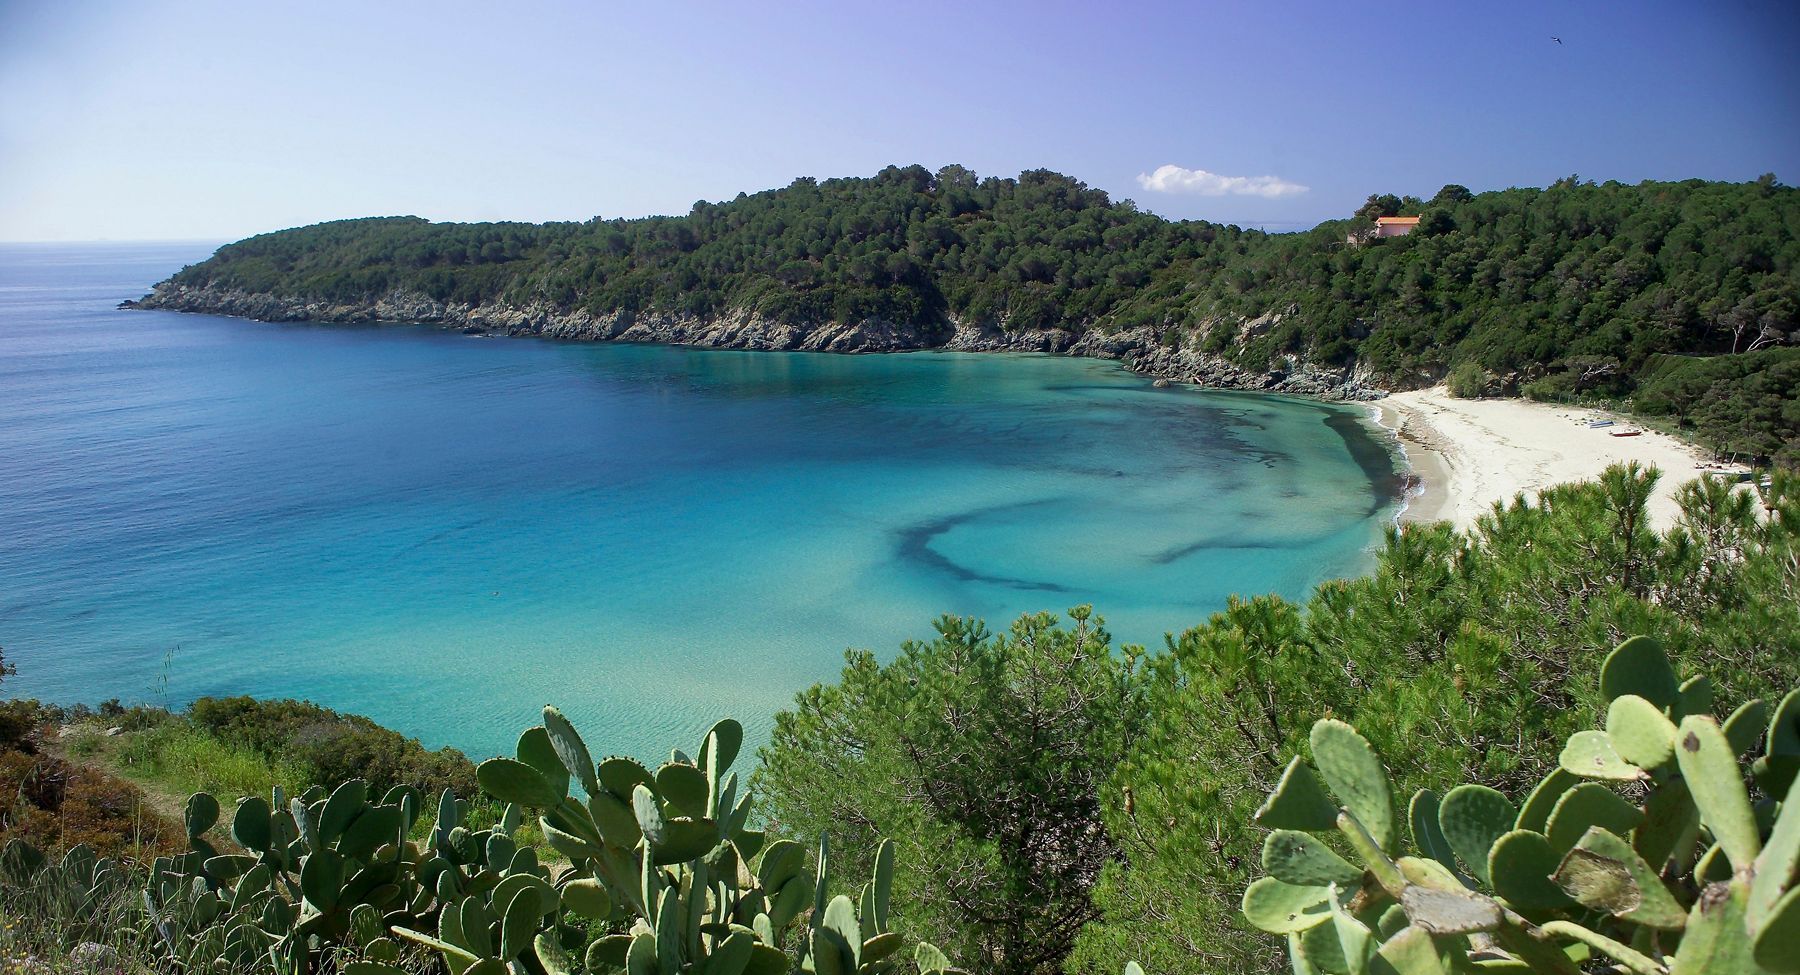 The island of Elba 